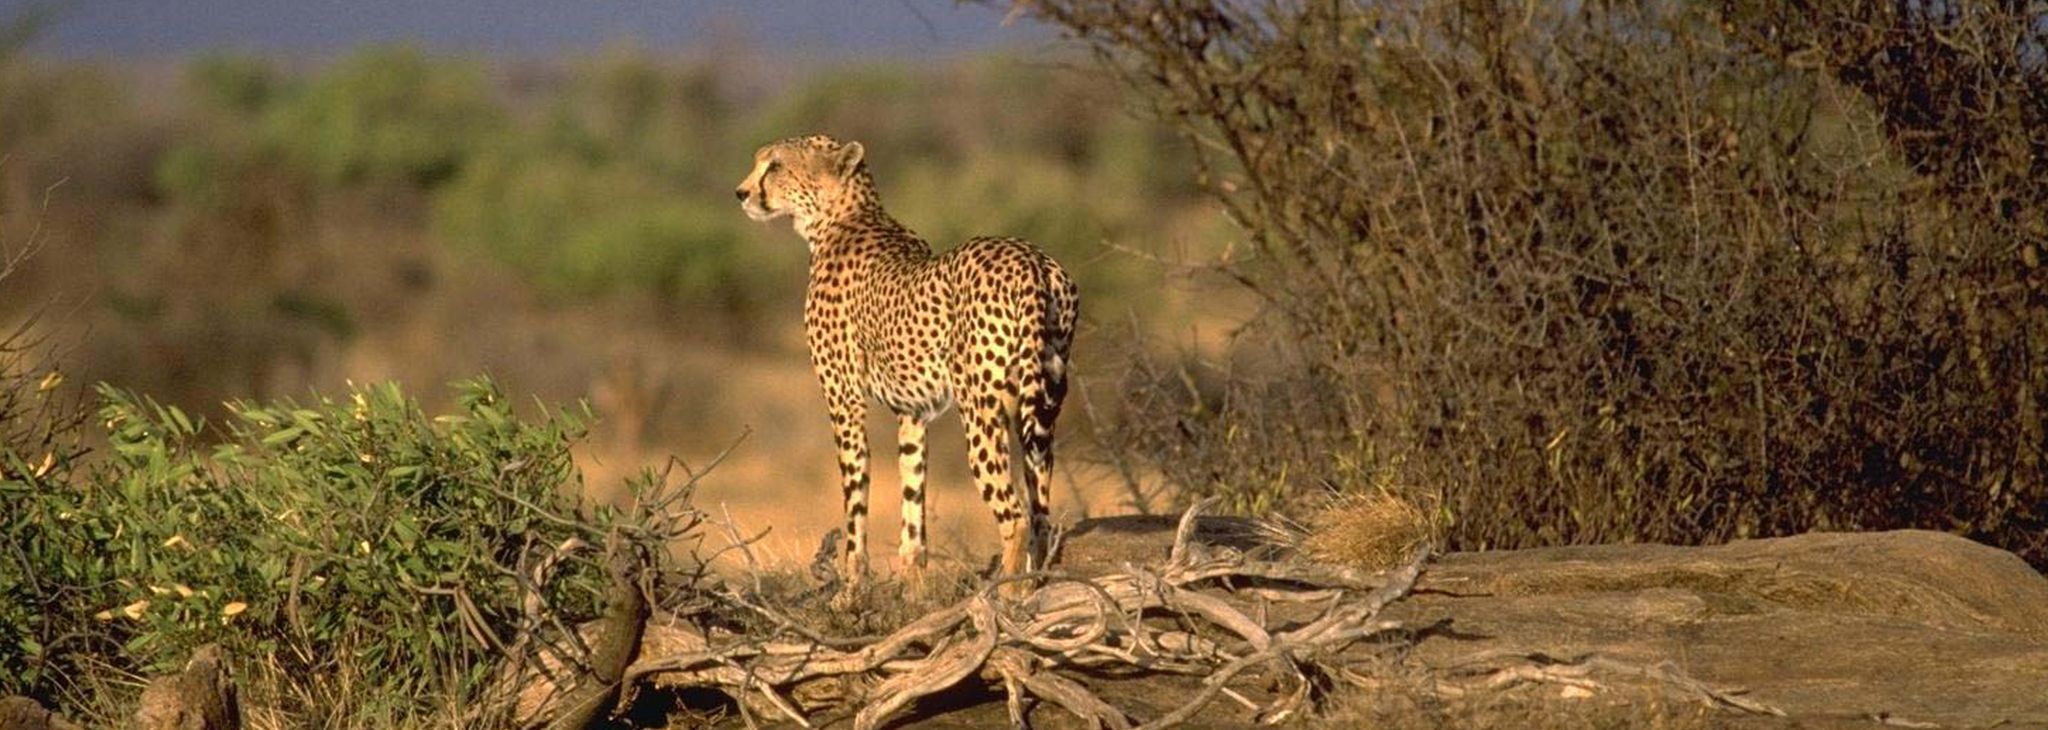 Terrestrial animal, Wildlife, Vertebrate, Mammal, Cheetah, Leopard, Felidae, Nature reserve, African leopard, Safari, 